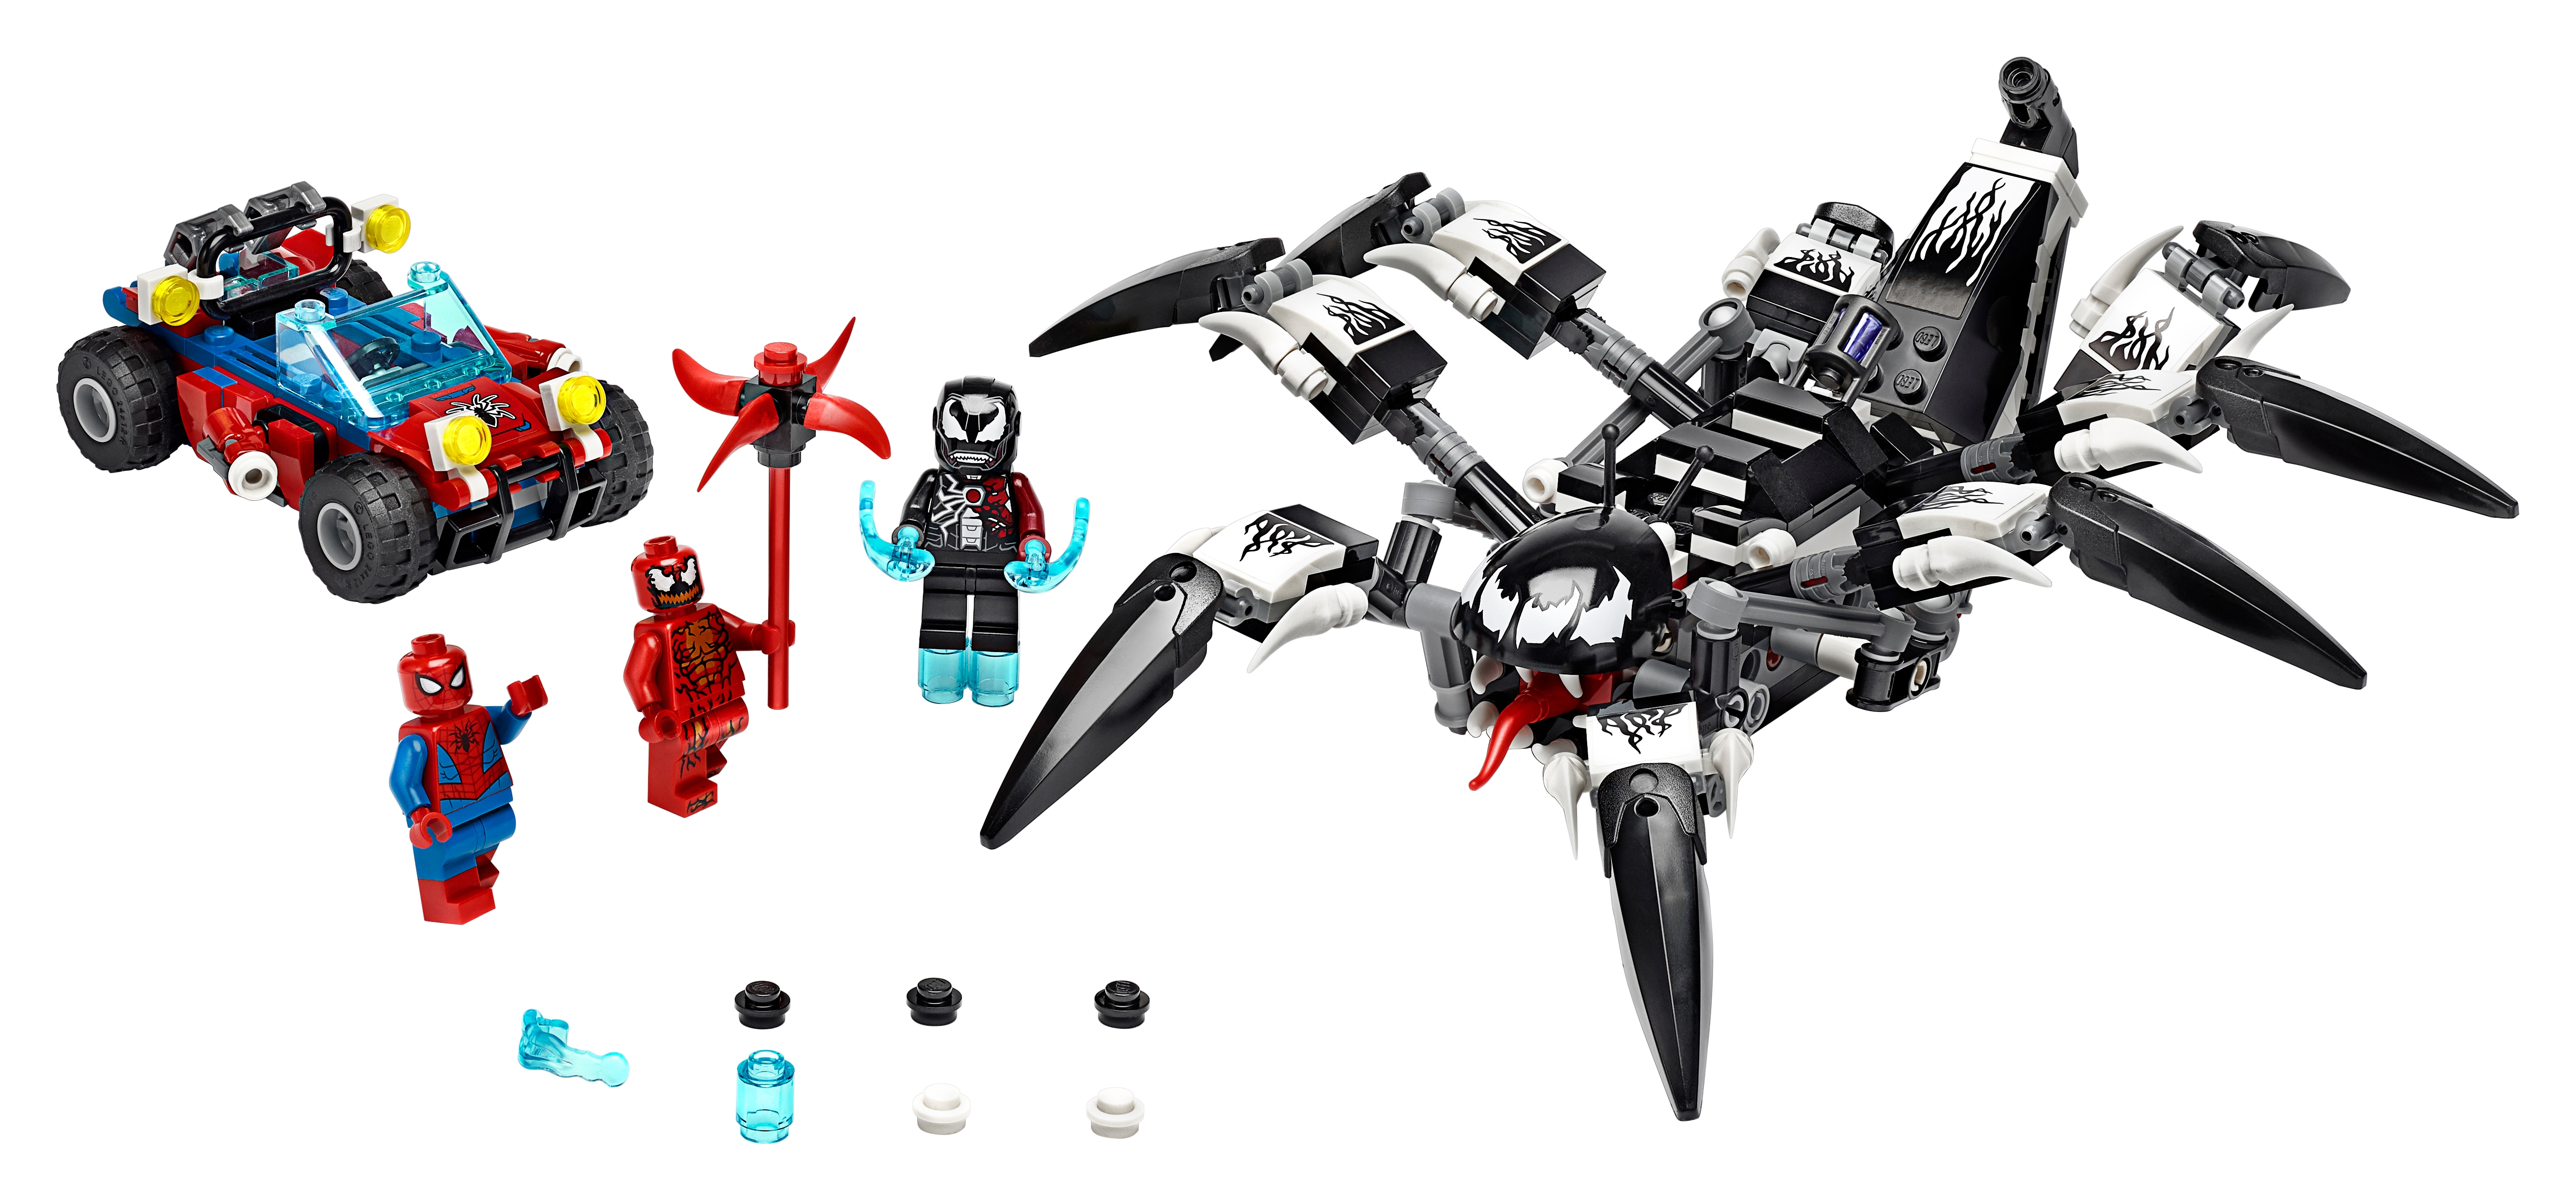 Lego - LEGO Marvel Super Heroes - 76163 Marvel Spider-Man Le